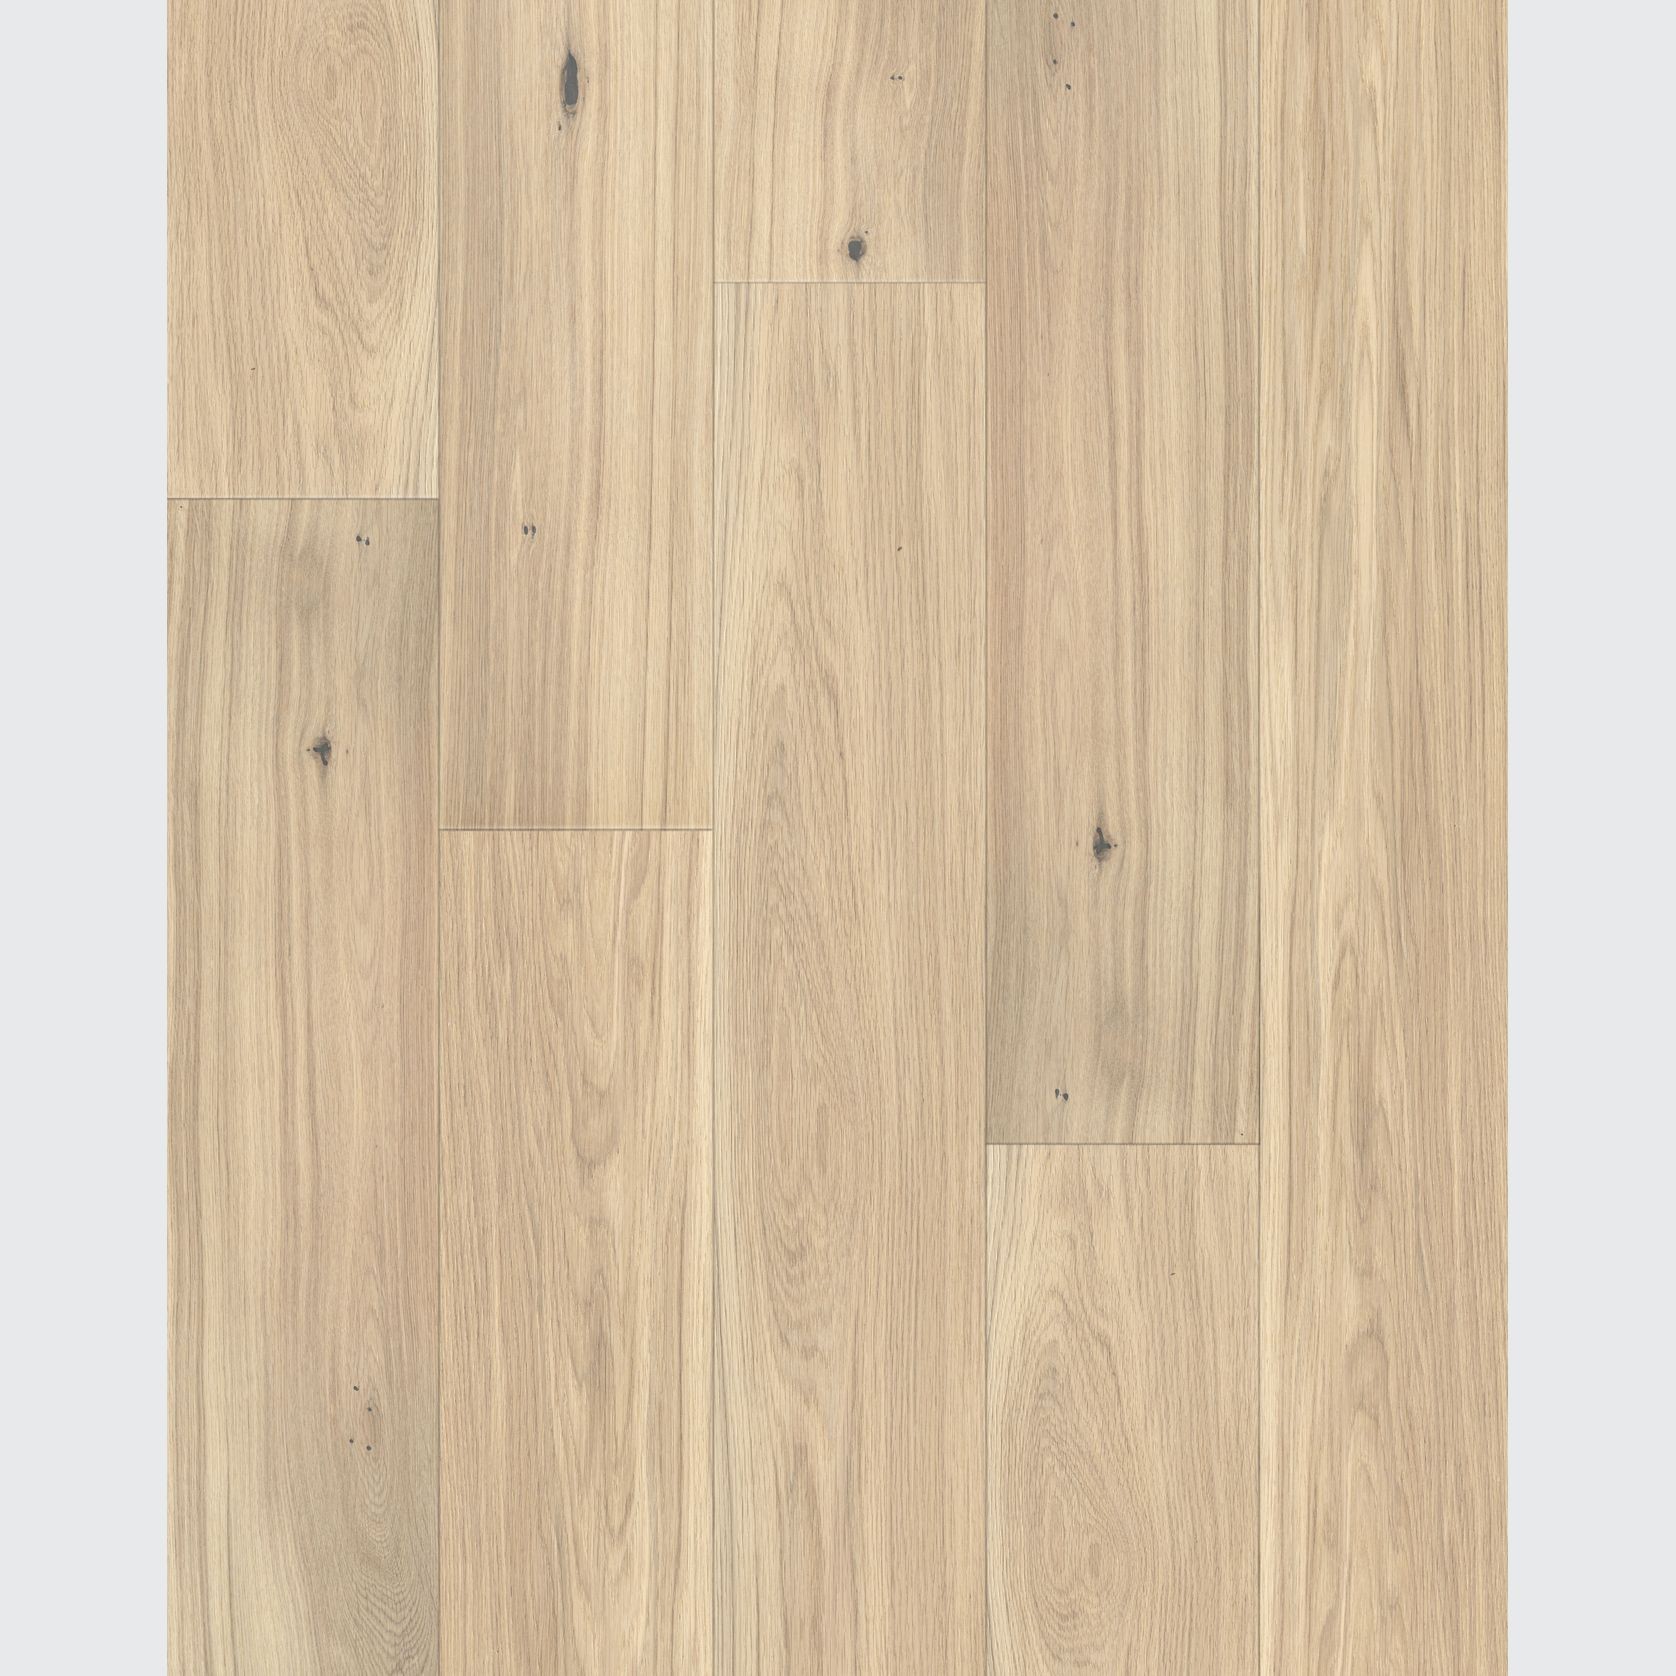 Moda Stretto Capri Light Feature Timber Flooring gallery detail image